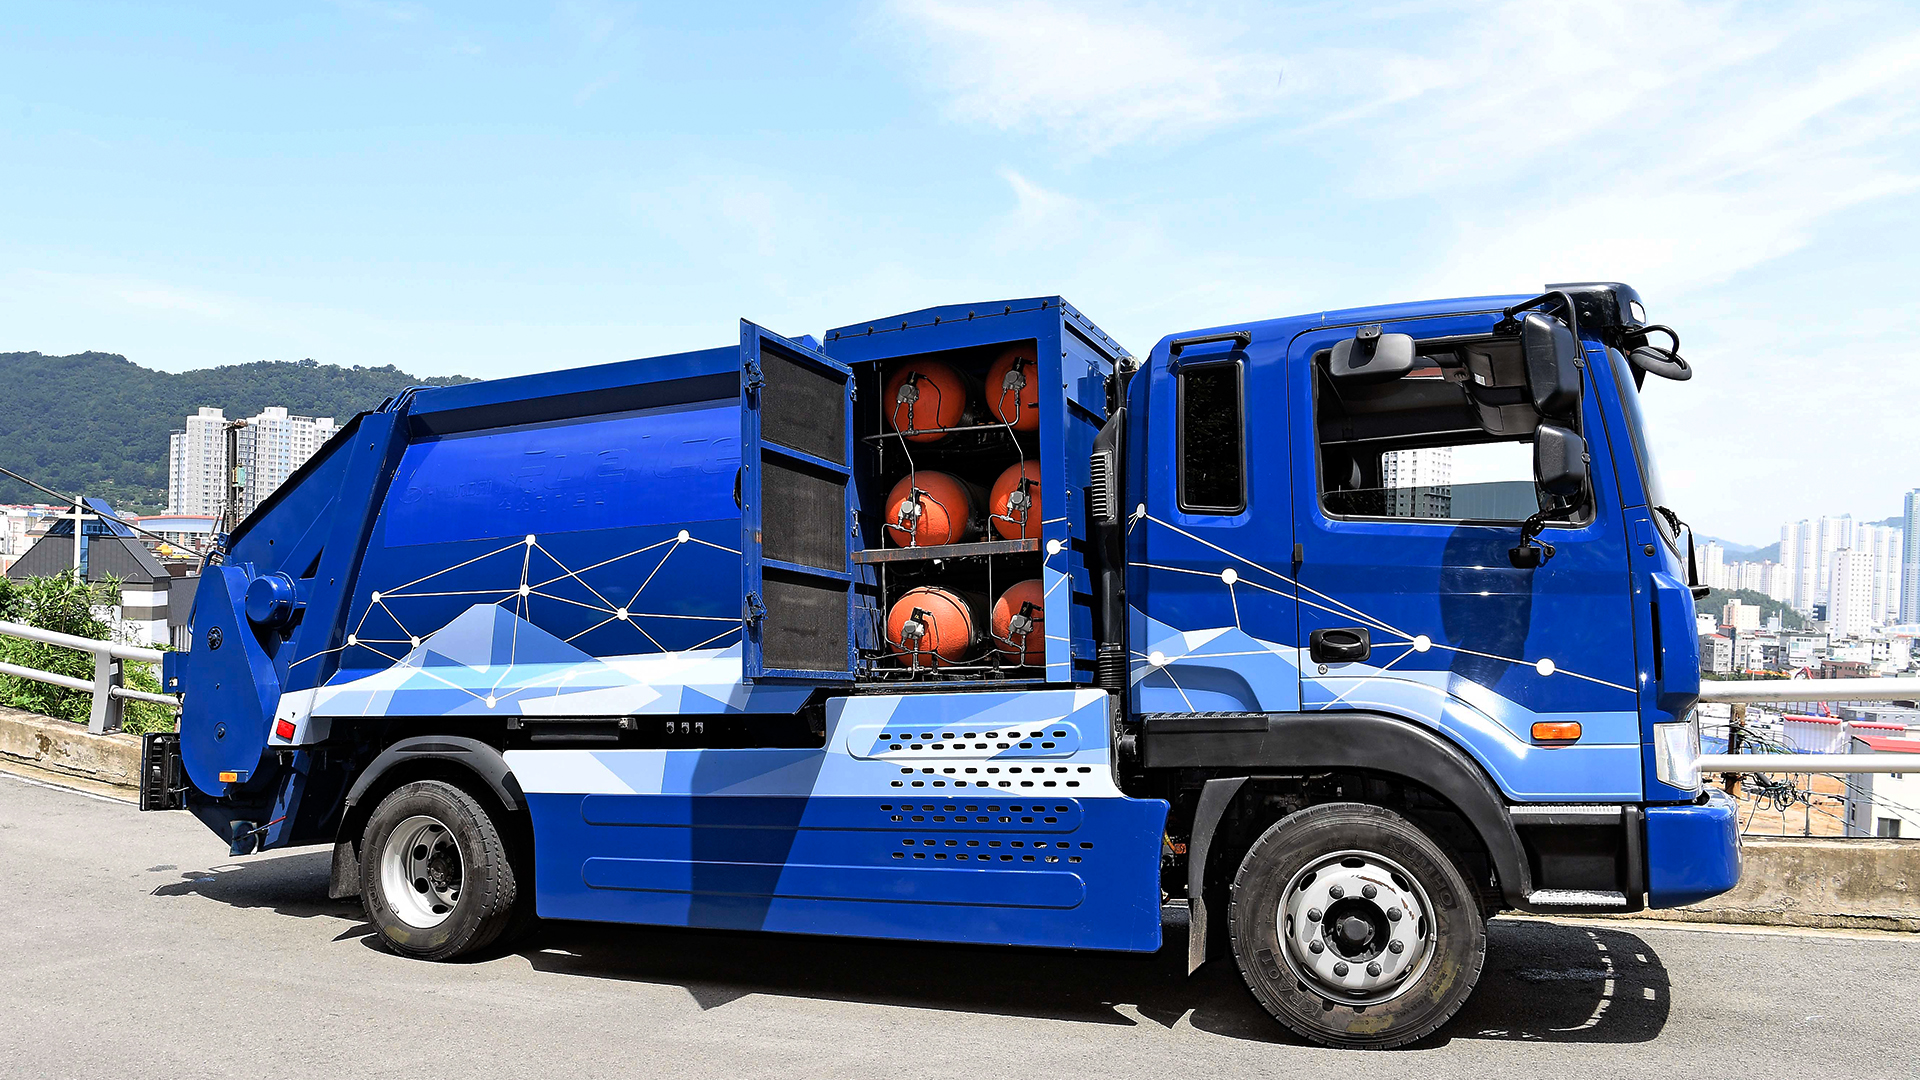 Hyundai Motor's hydrogen cleaning truck